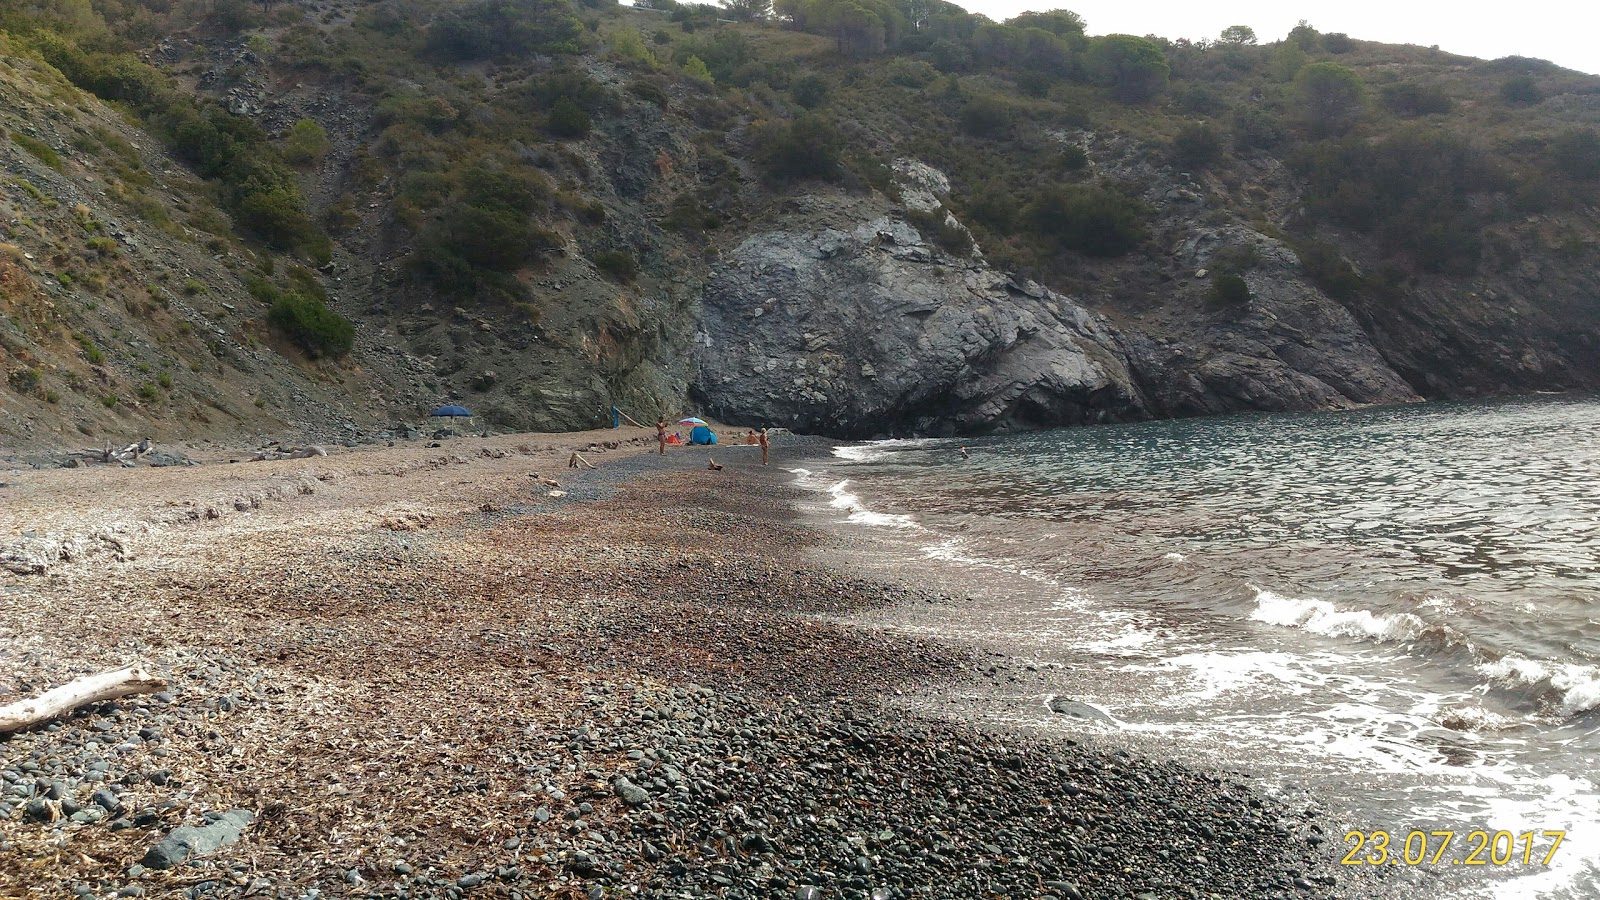 Fotografie cu Spiaggia Le Tombe cu nivelul de curățenie in medie